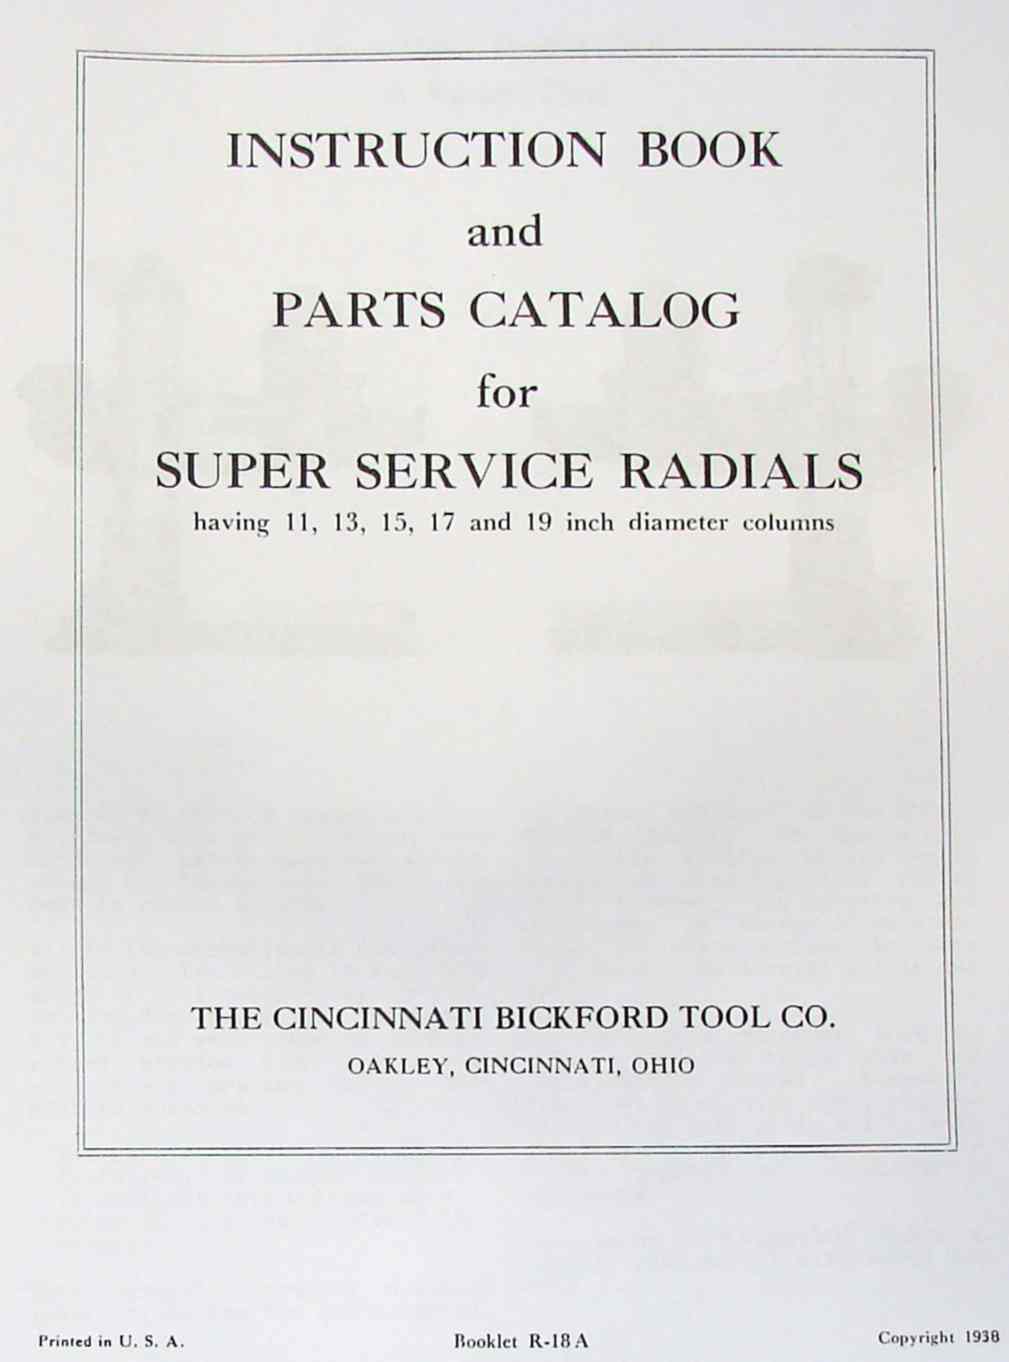 Cincinnati Bickford 9" Column Radial Drill Instruction and Parts Manual 1947 